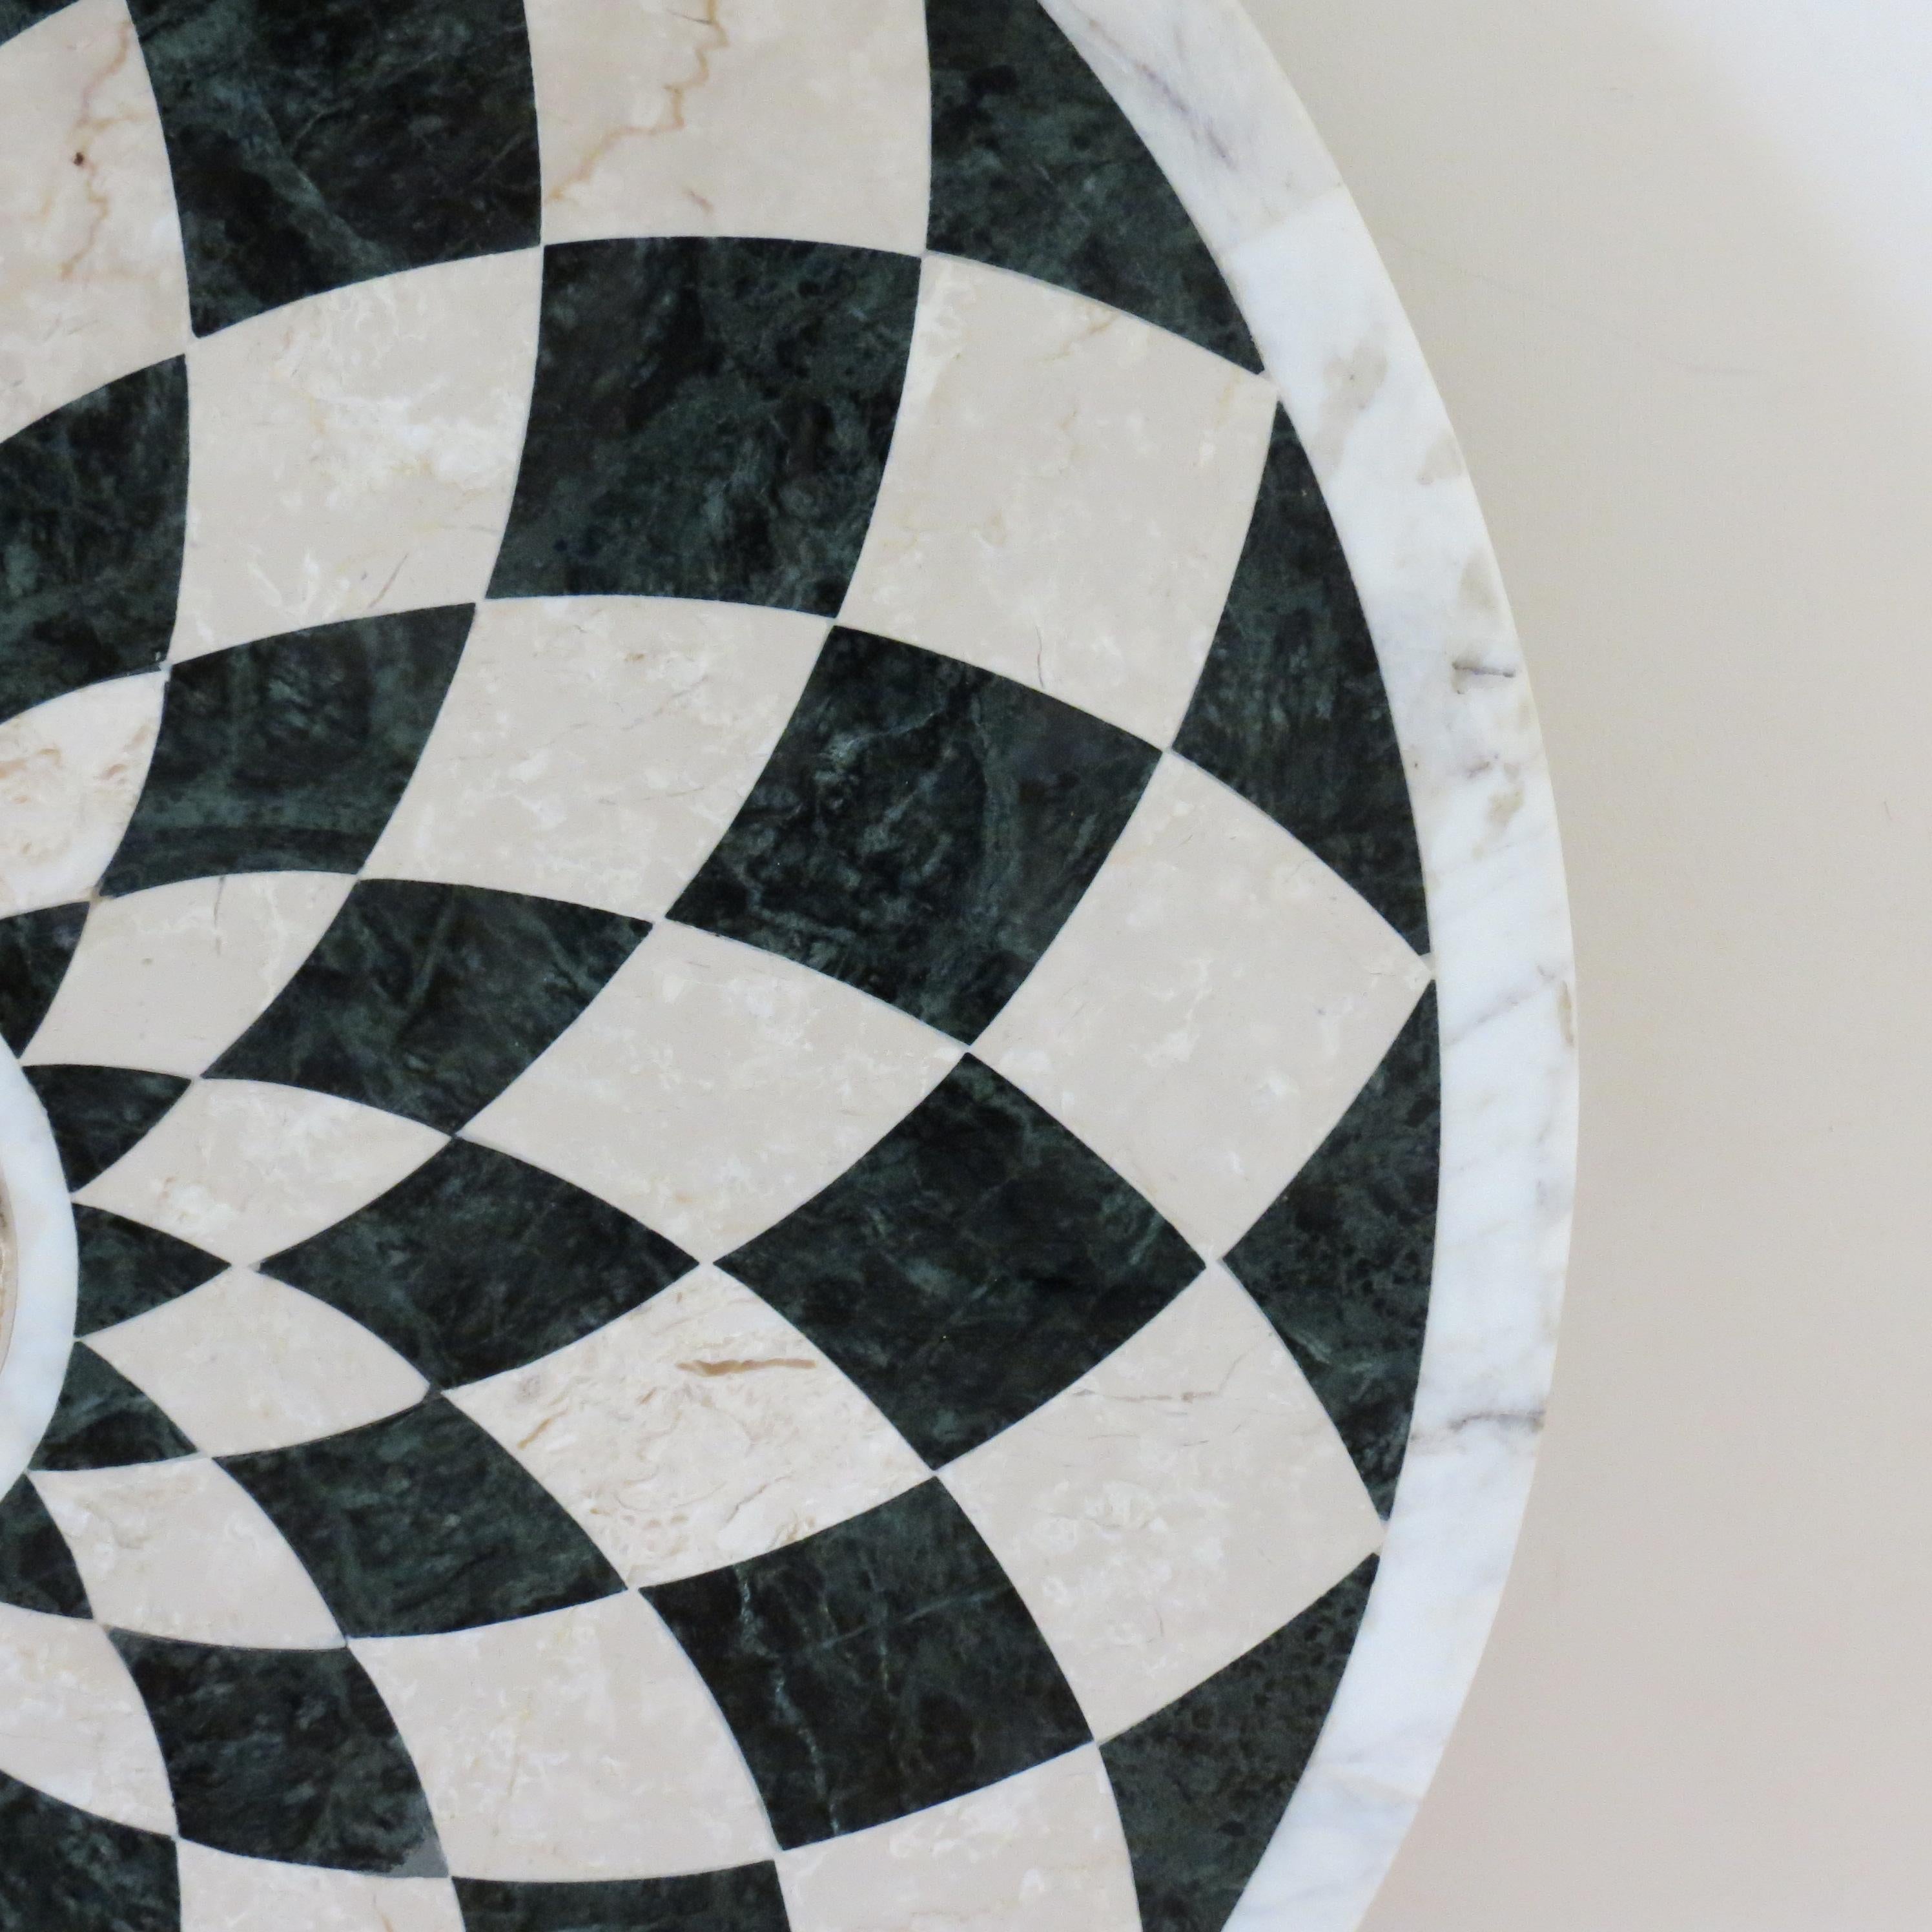 Pietra Dura Italian Marble Table Top Geometric Pattern Black White Monochrome 3